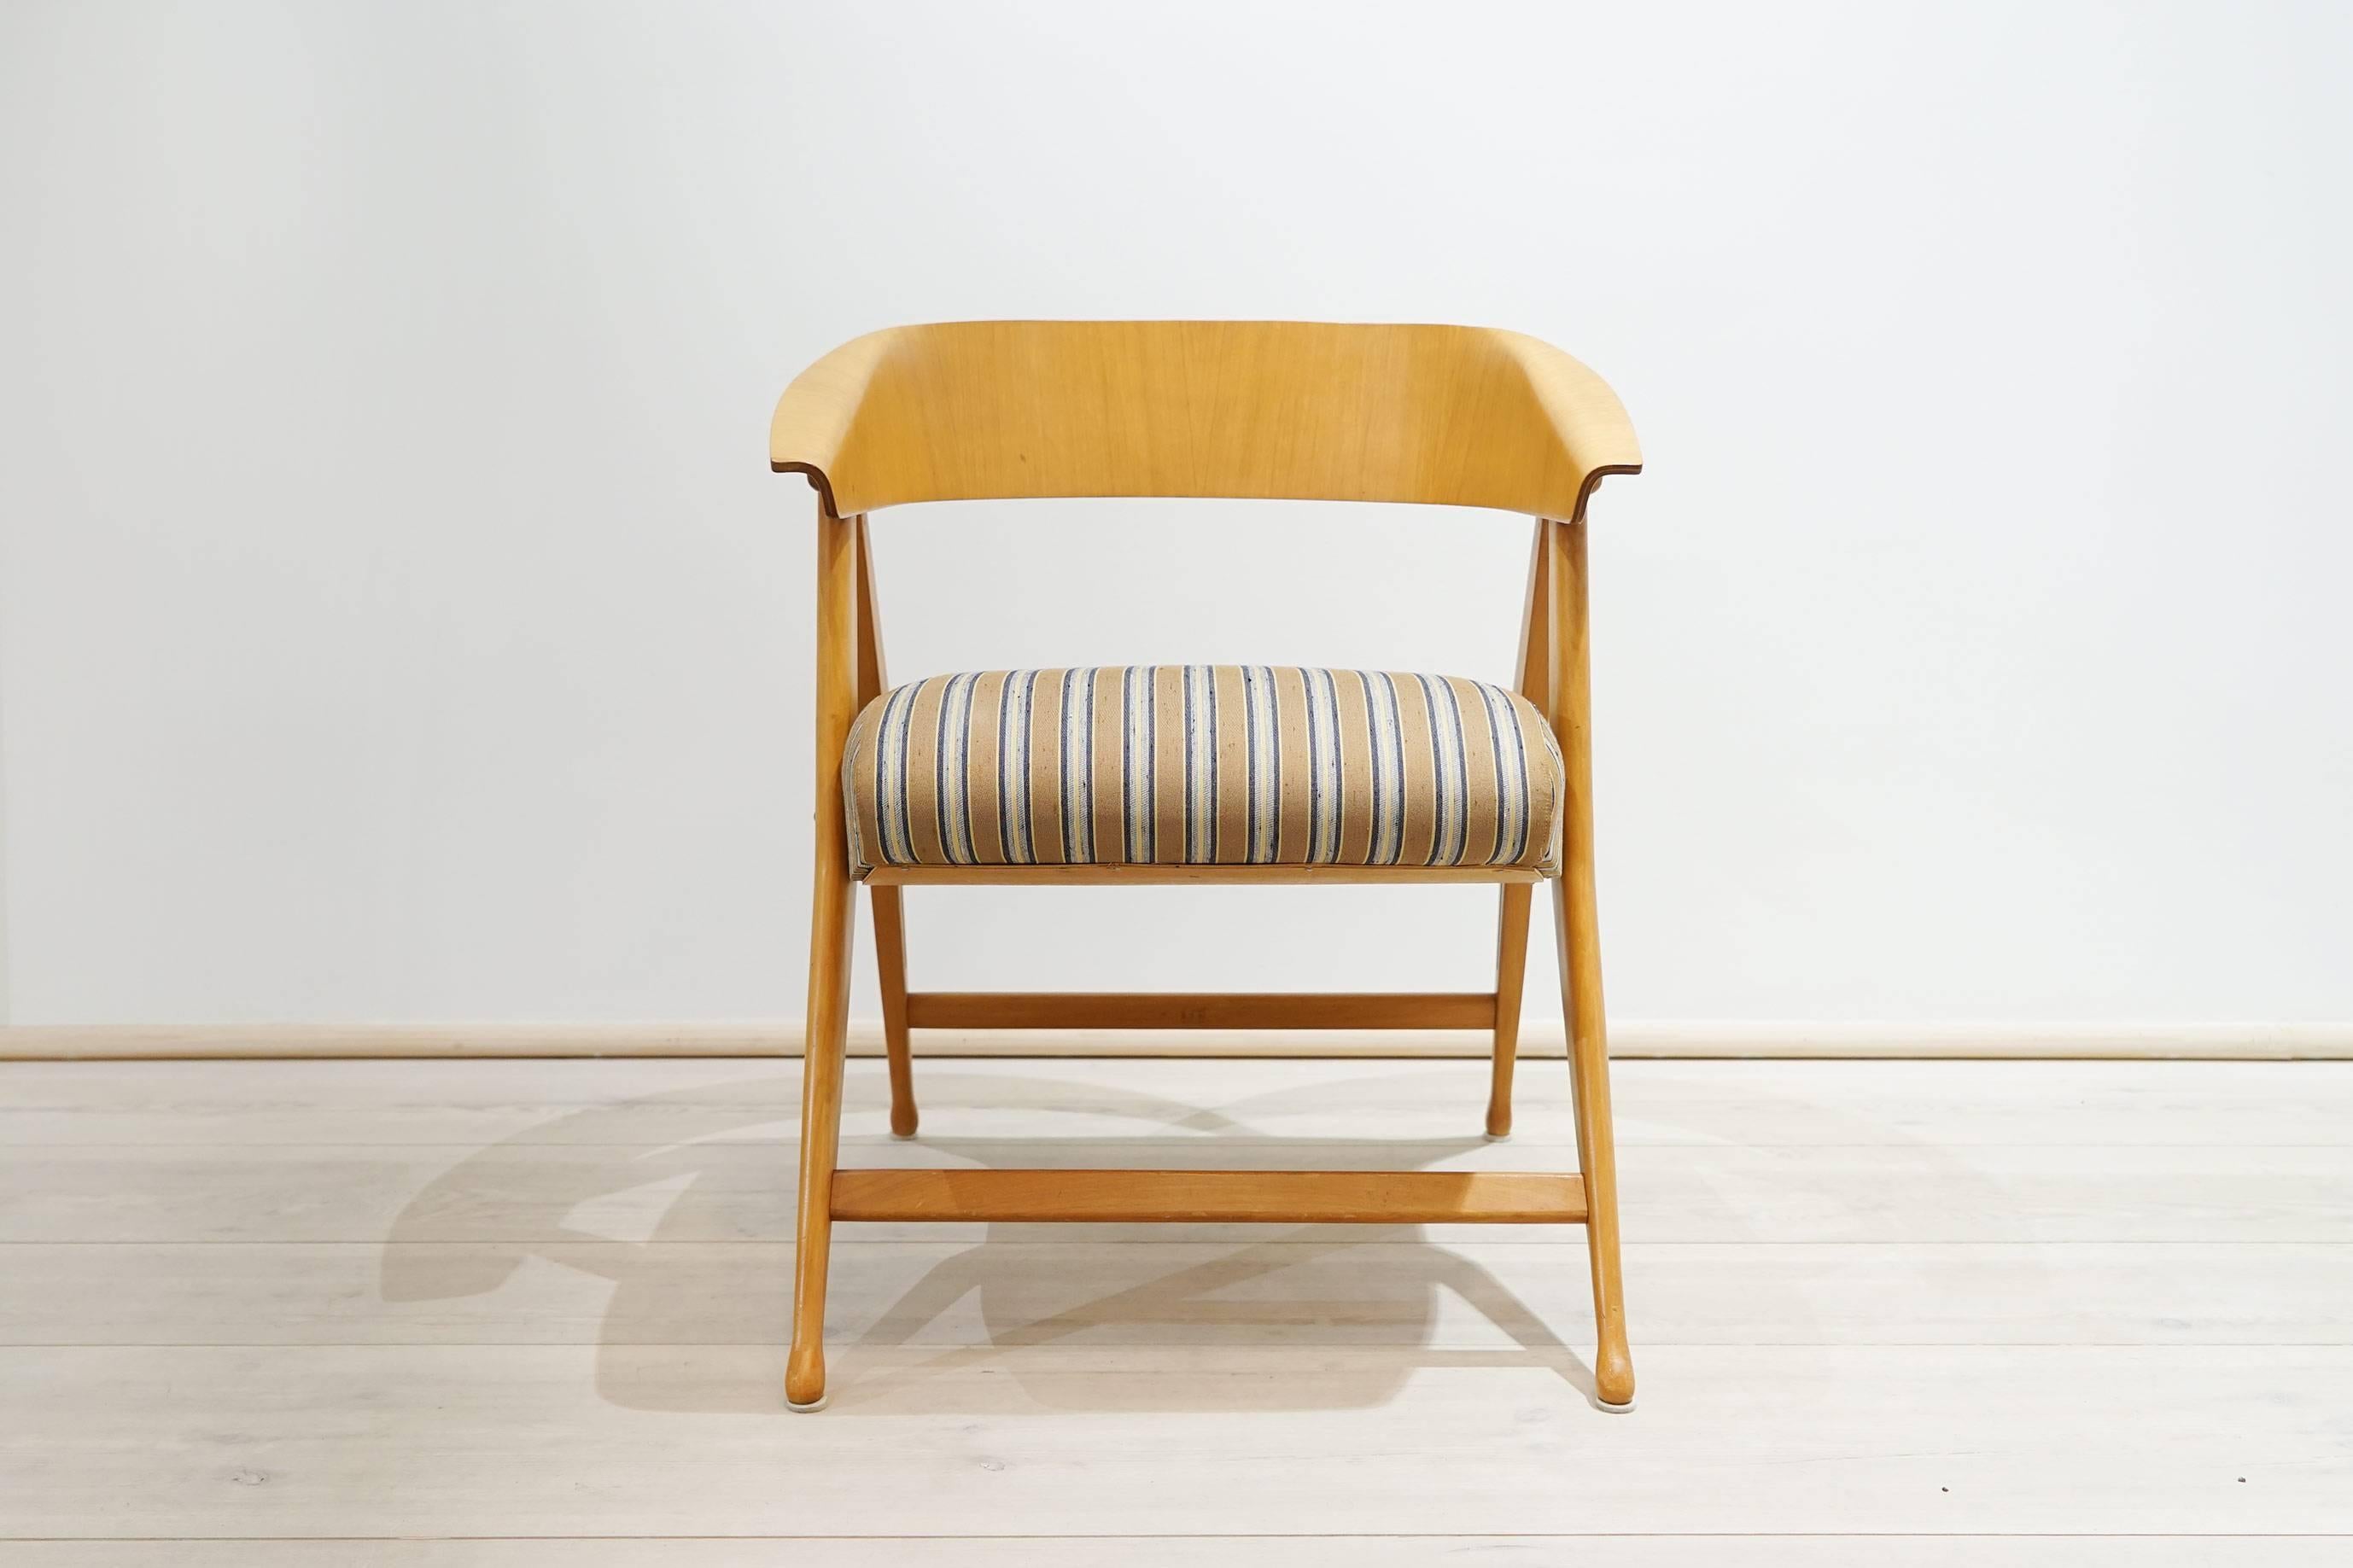 Armchair, folding chair by Gio Ponti, Cassina, Regiutti Brescia, Italy, 1954-1955.